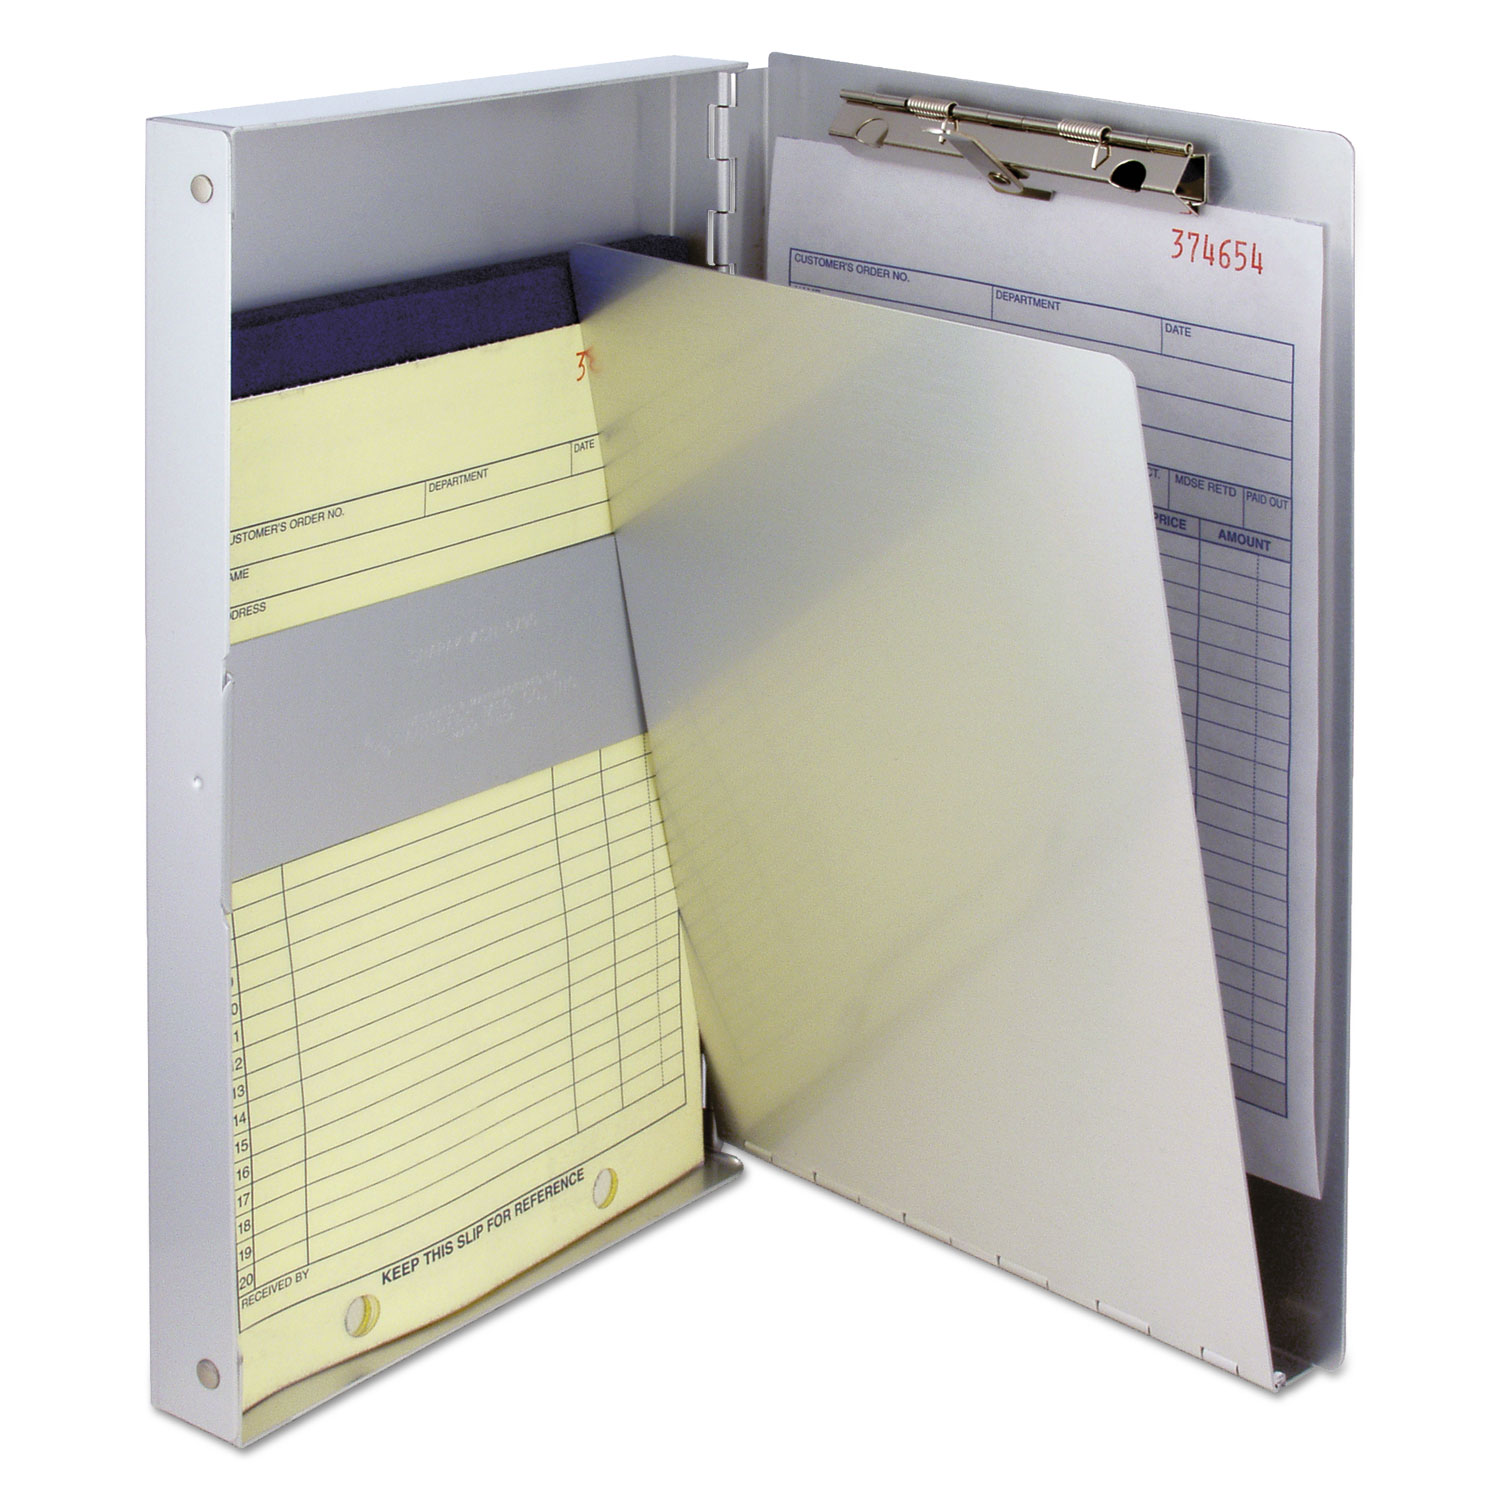 Snapak Aluminum Side-Open Forms Folder, 3/8 Clip, 5 2/3 x 9 1/2 Sheets, Silver